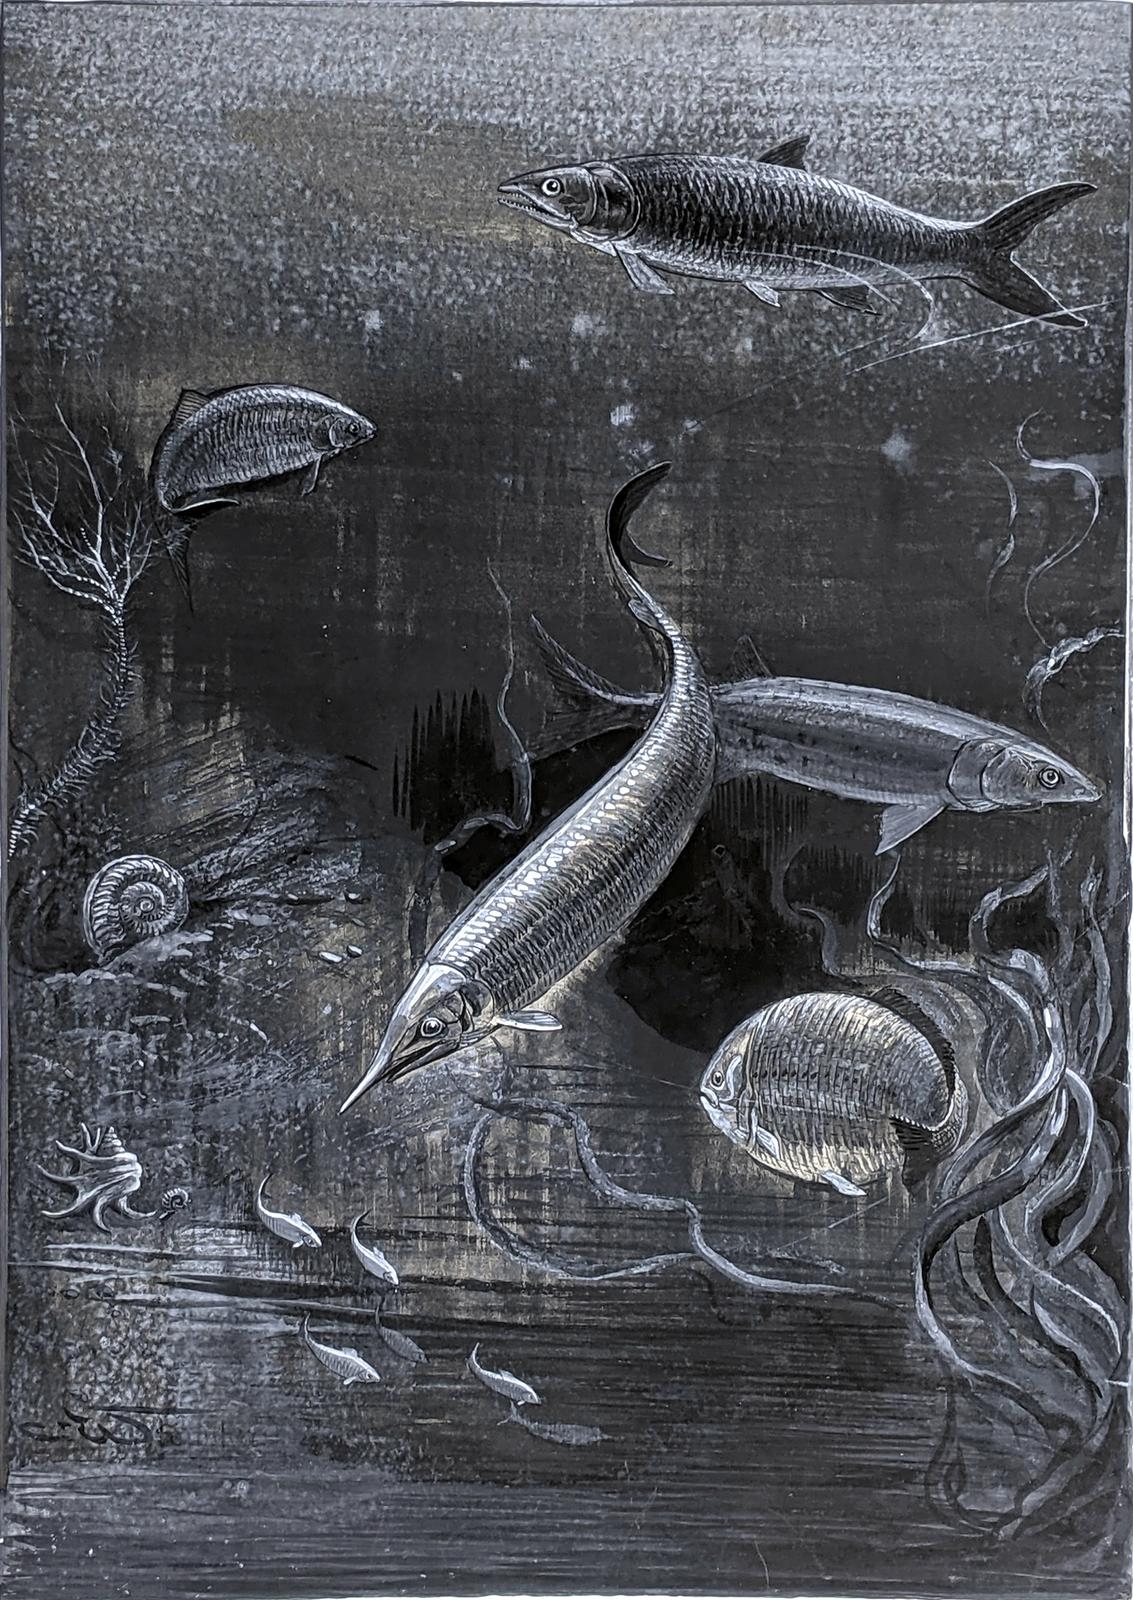 Fishes of the Jurassic Period (Hypsocormus, Aspidorhynchus, Sprattiformis, Caturus, Chondrostreus, Dapedius) by Charles Whymper, c.1905-1912